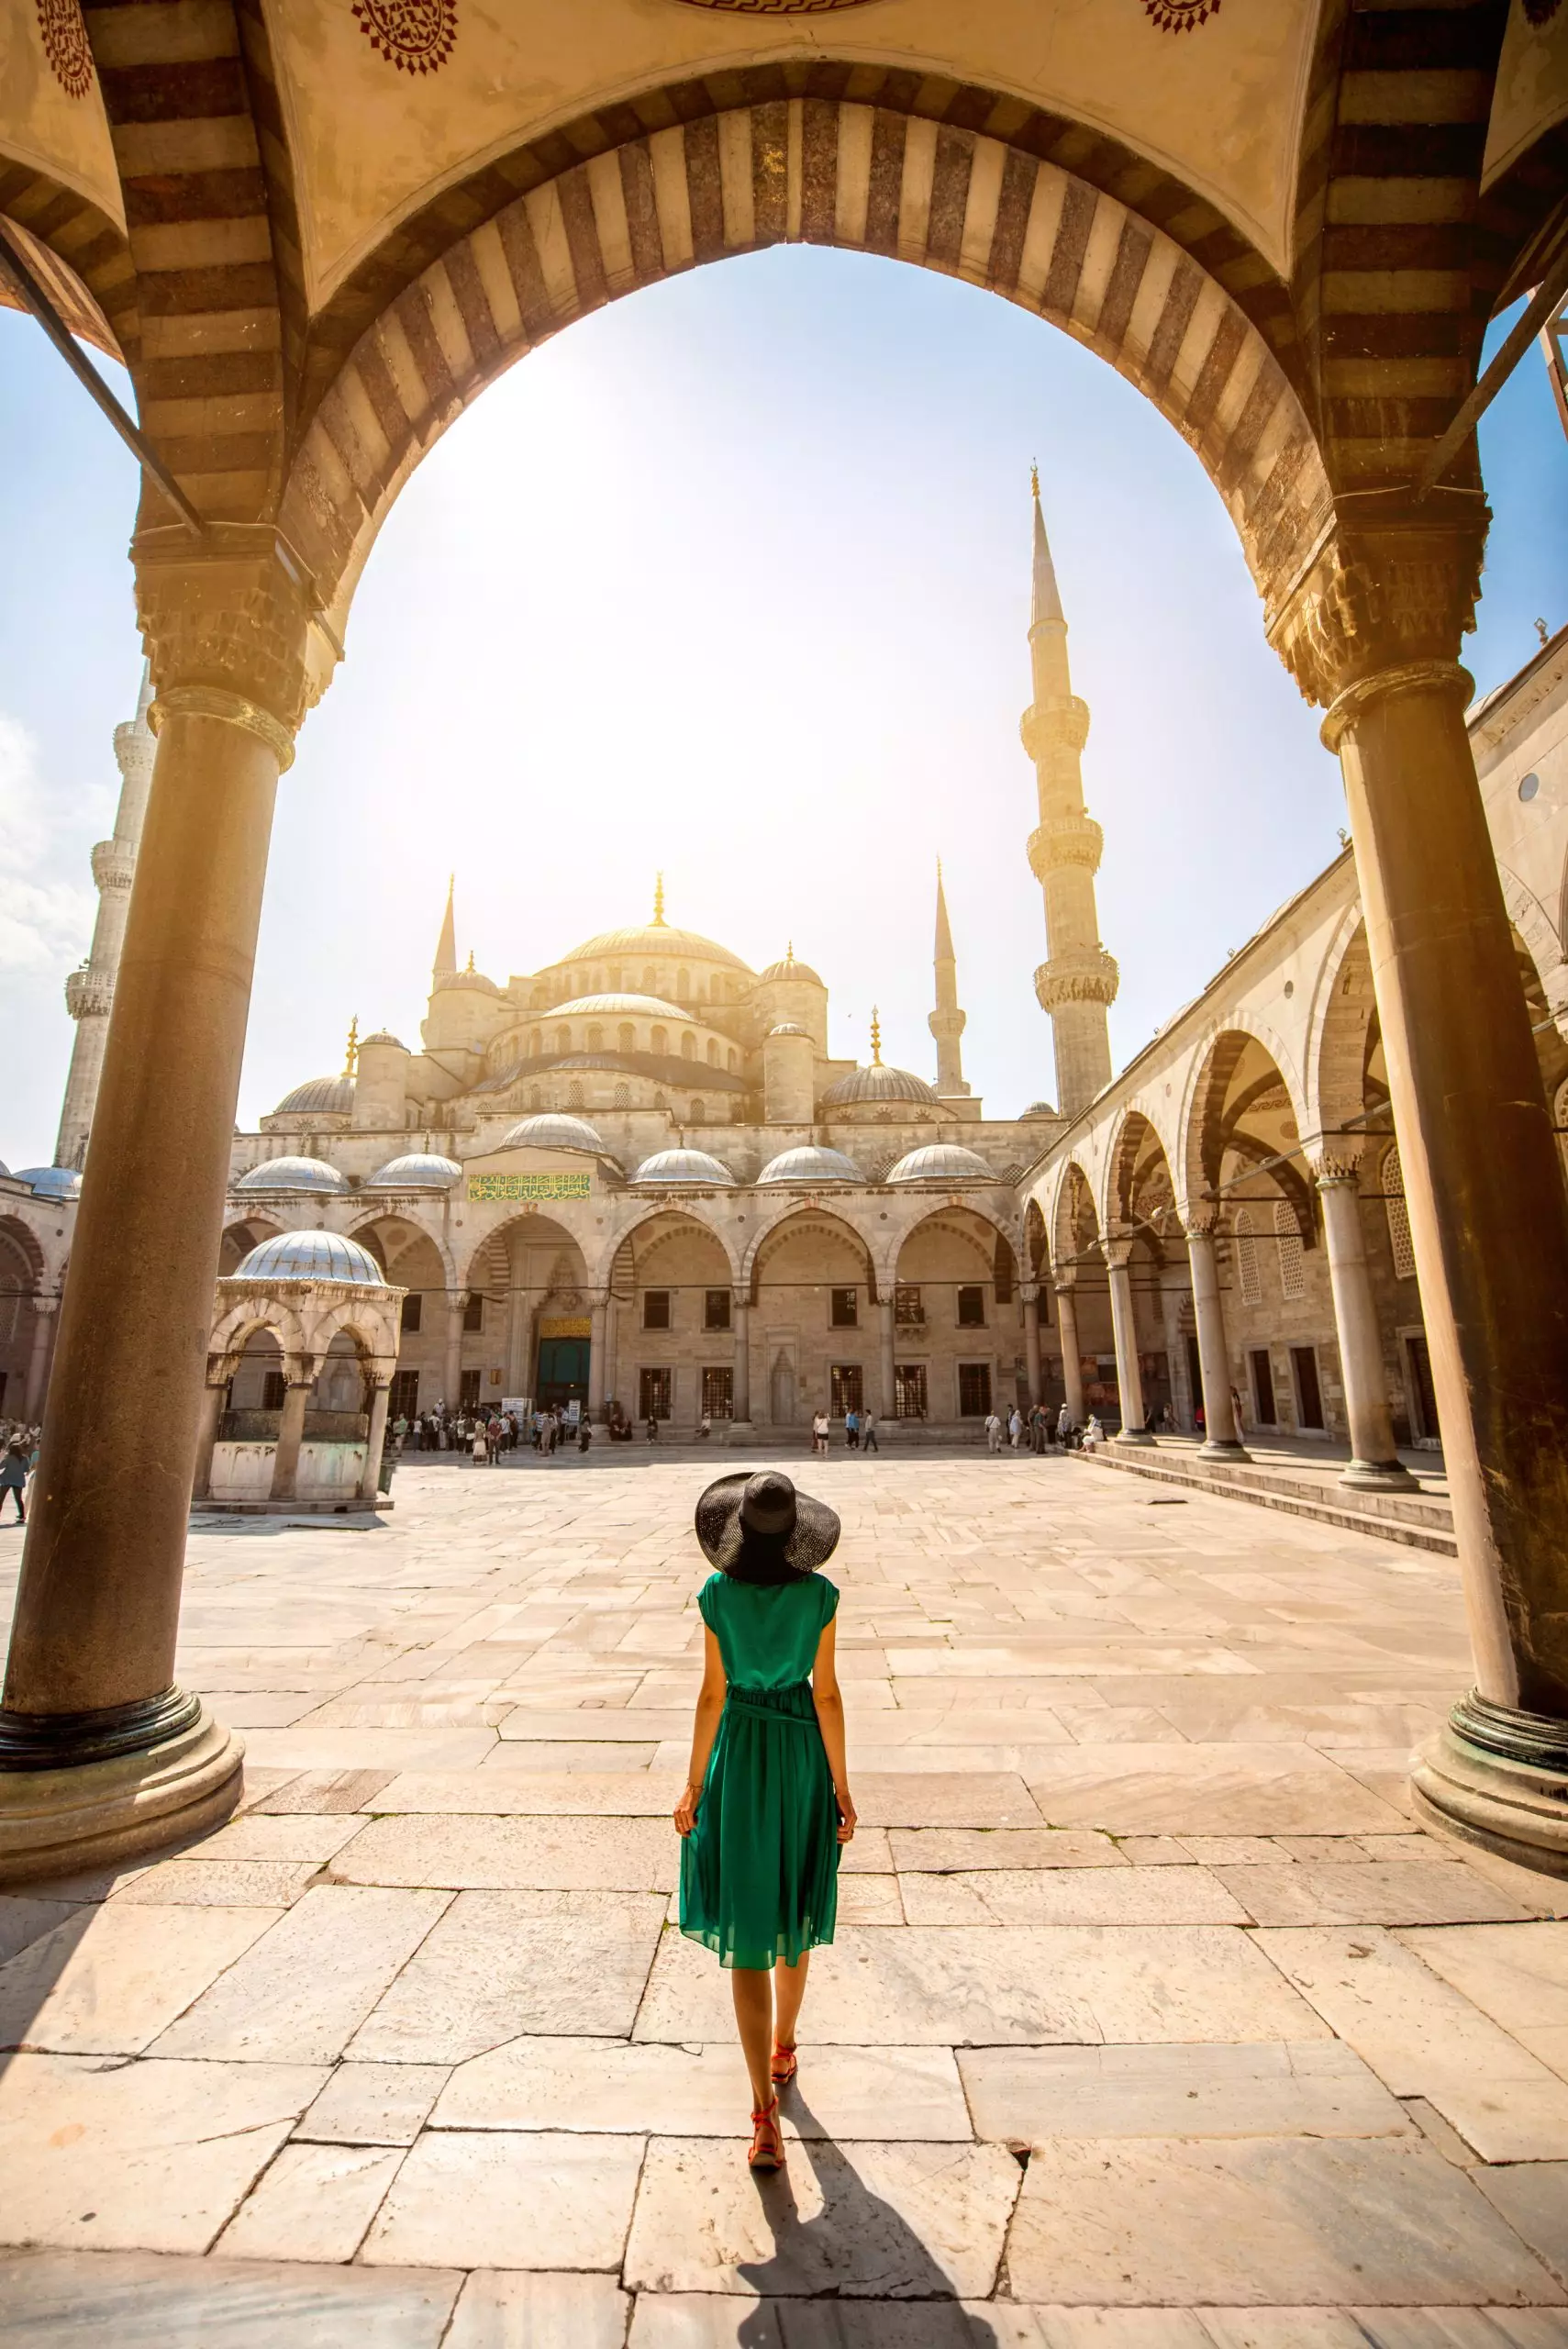 The Blue Mosque, Istanbul, Turkey - Celestyal Cruises